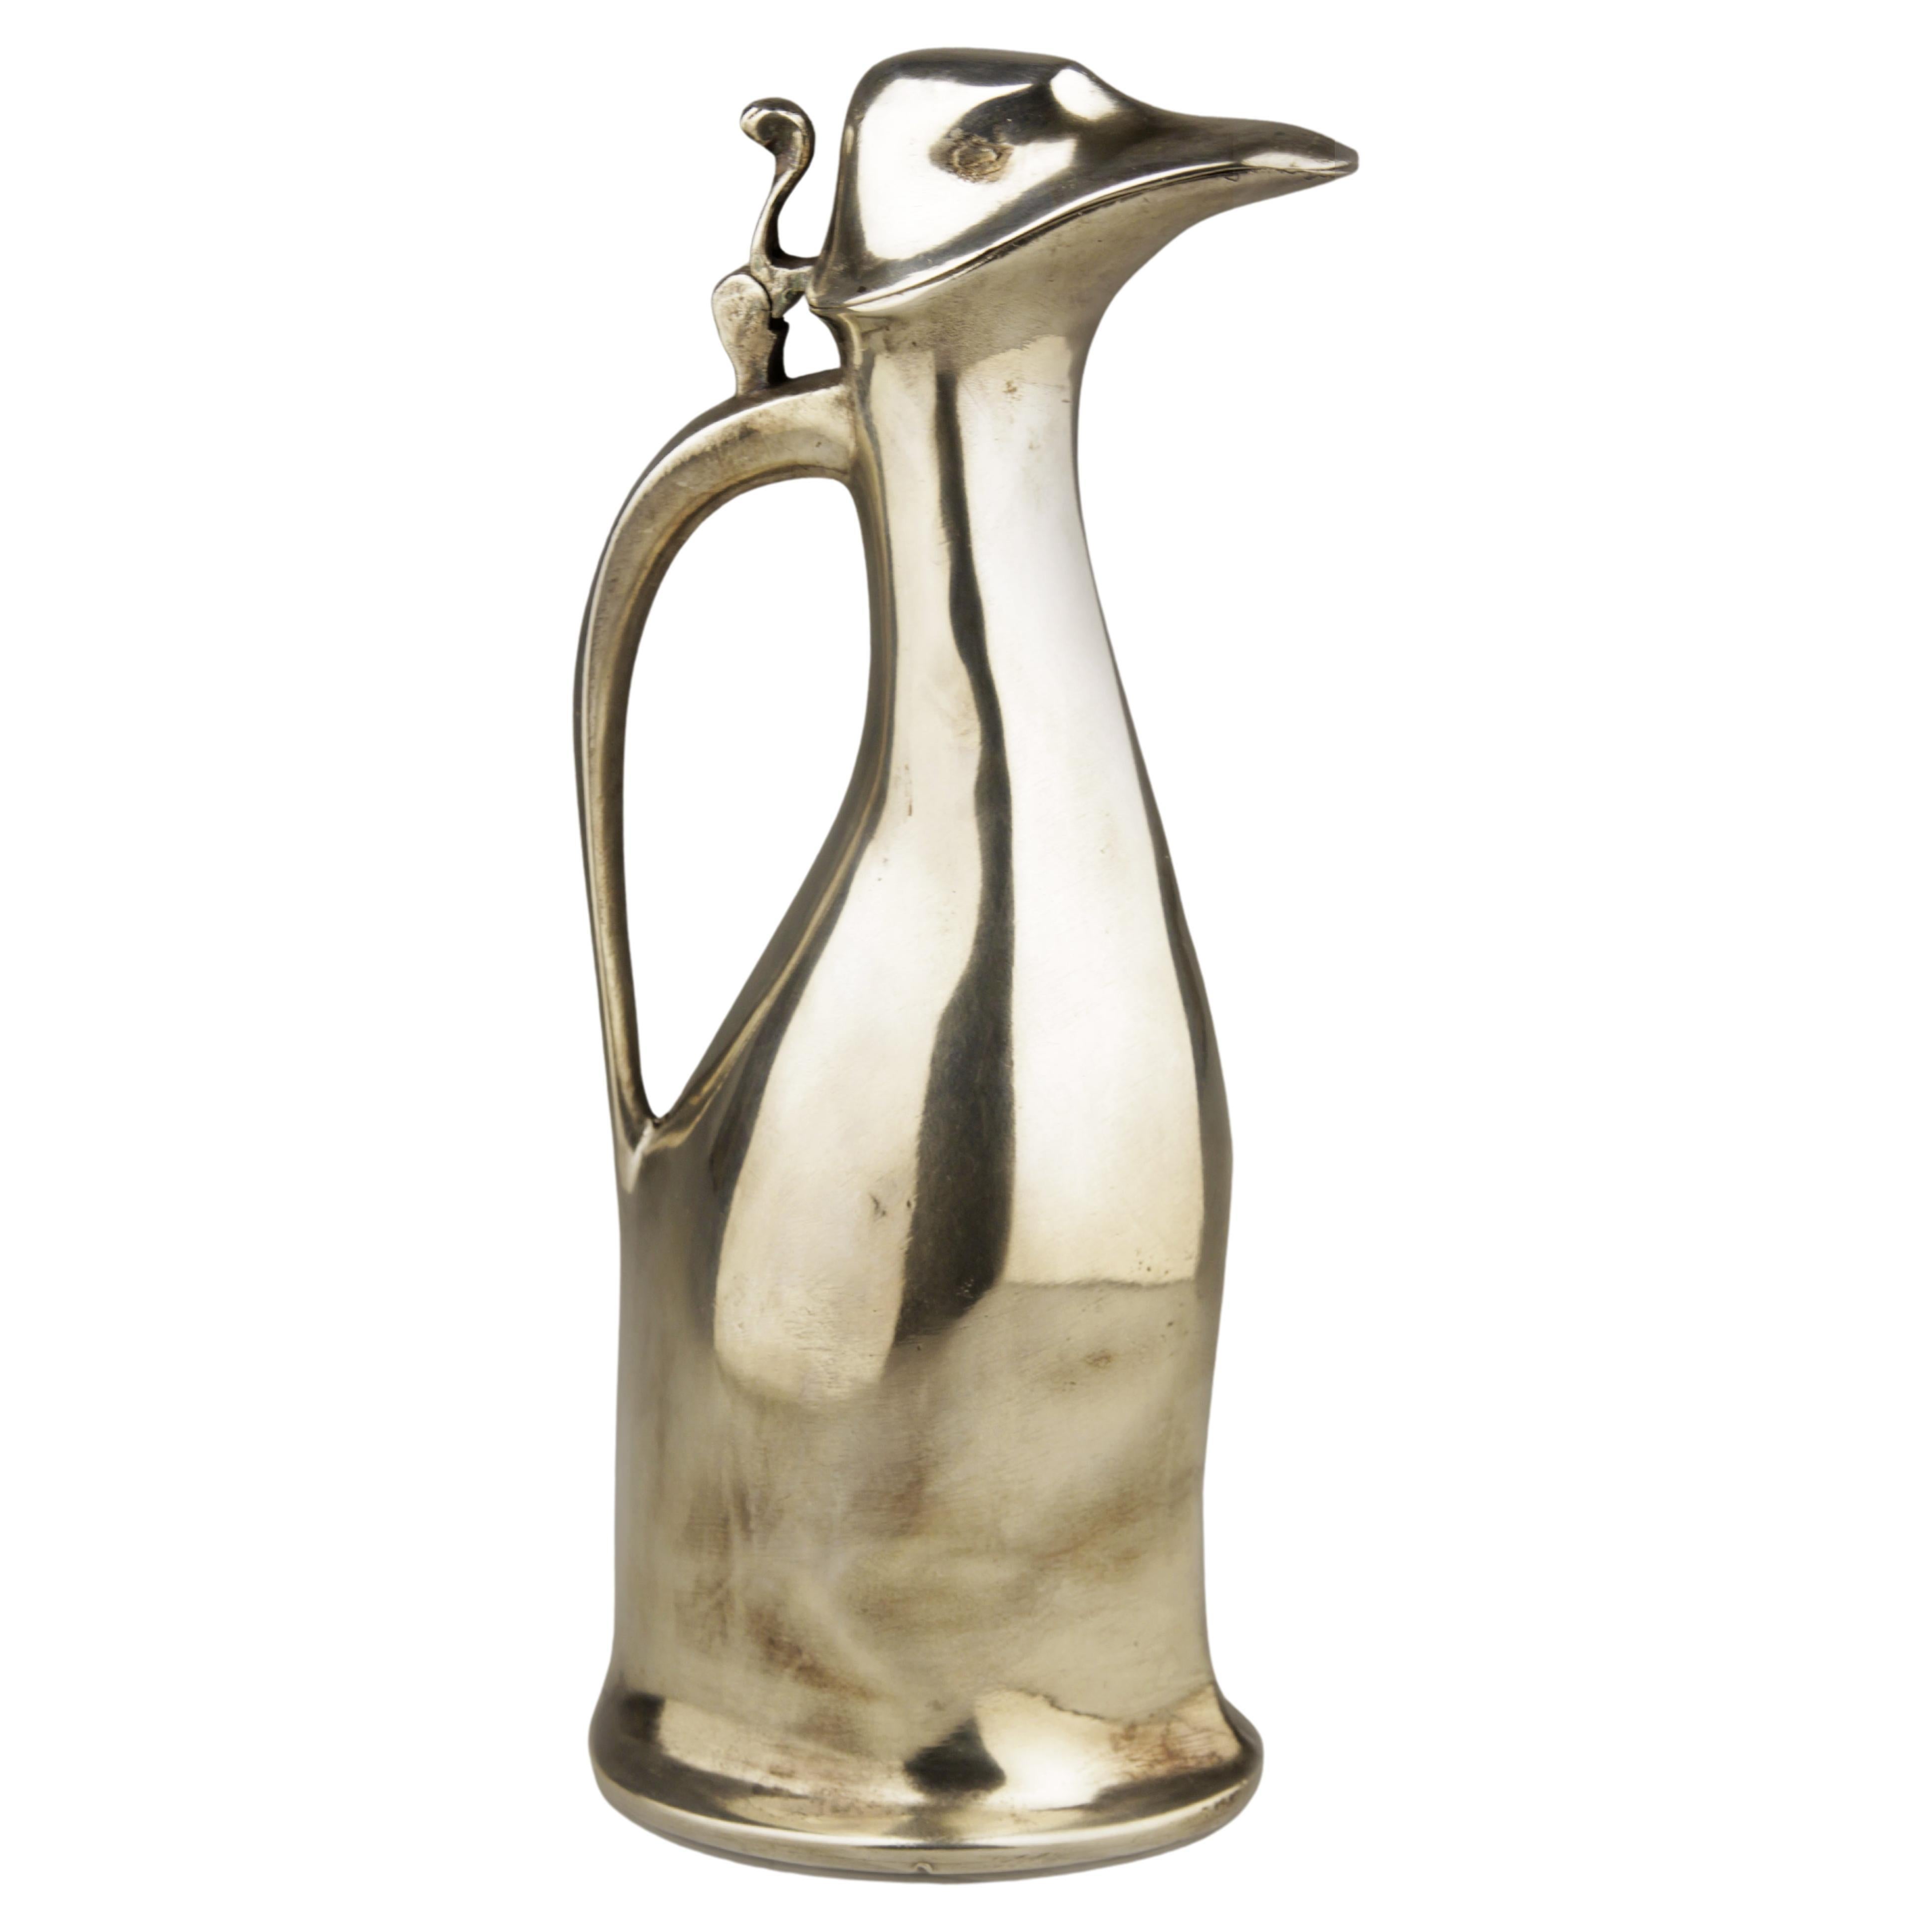 Polished Pewter Penguin-Shaped Decanter Designed by Hugo Leven for Kayserzinn